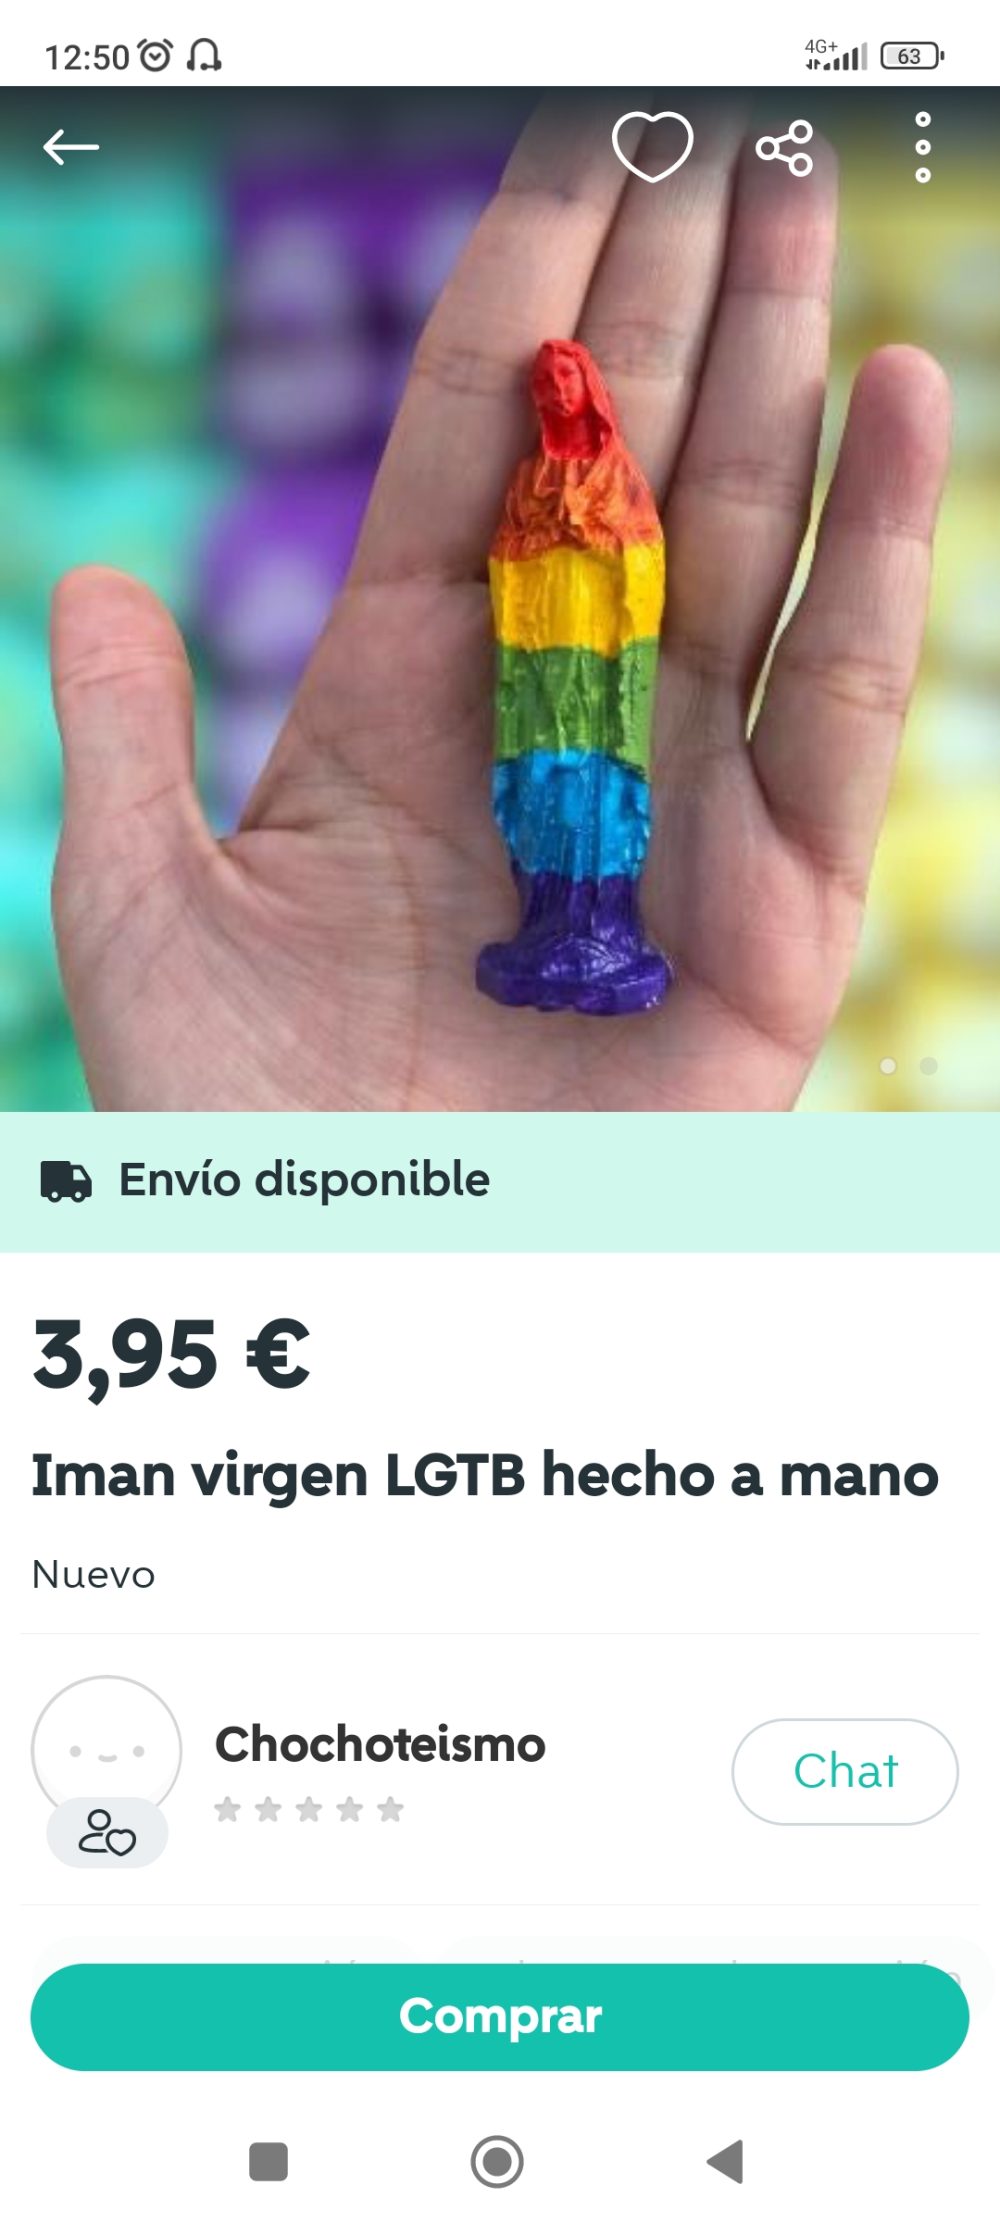 "Imán virgen LGTB hecho a mano"